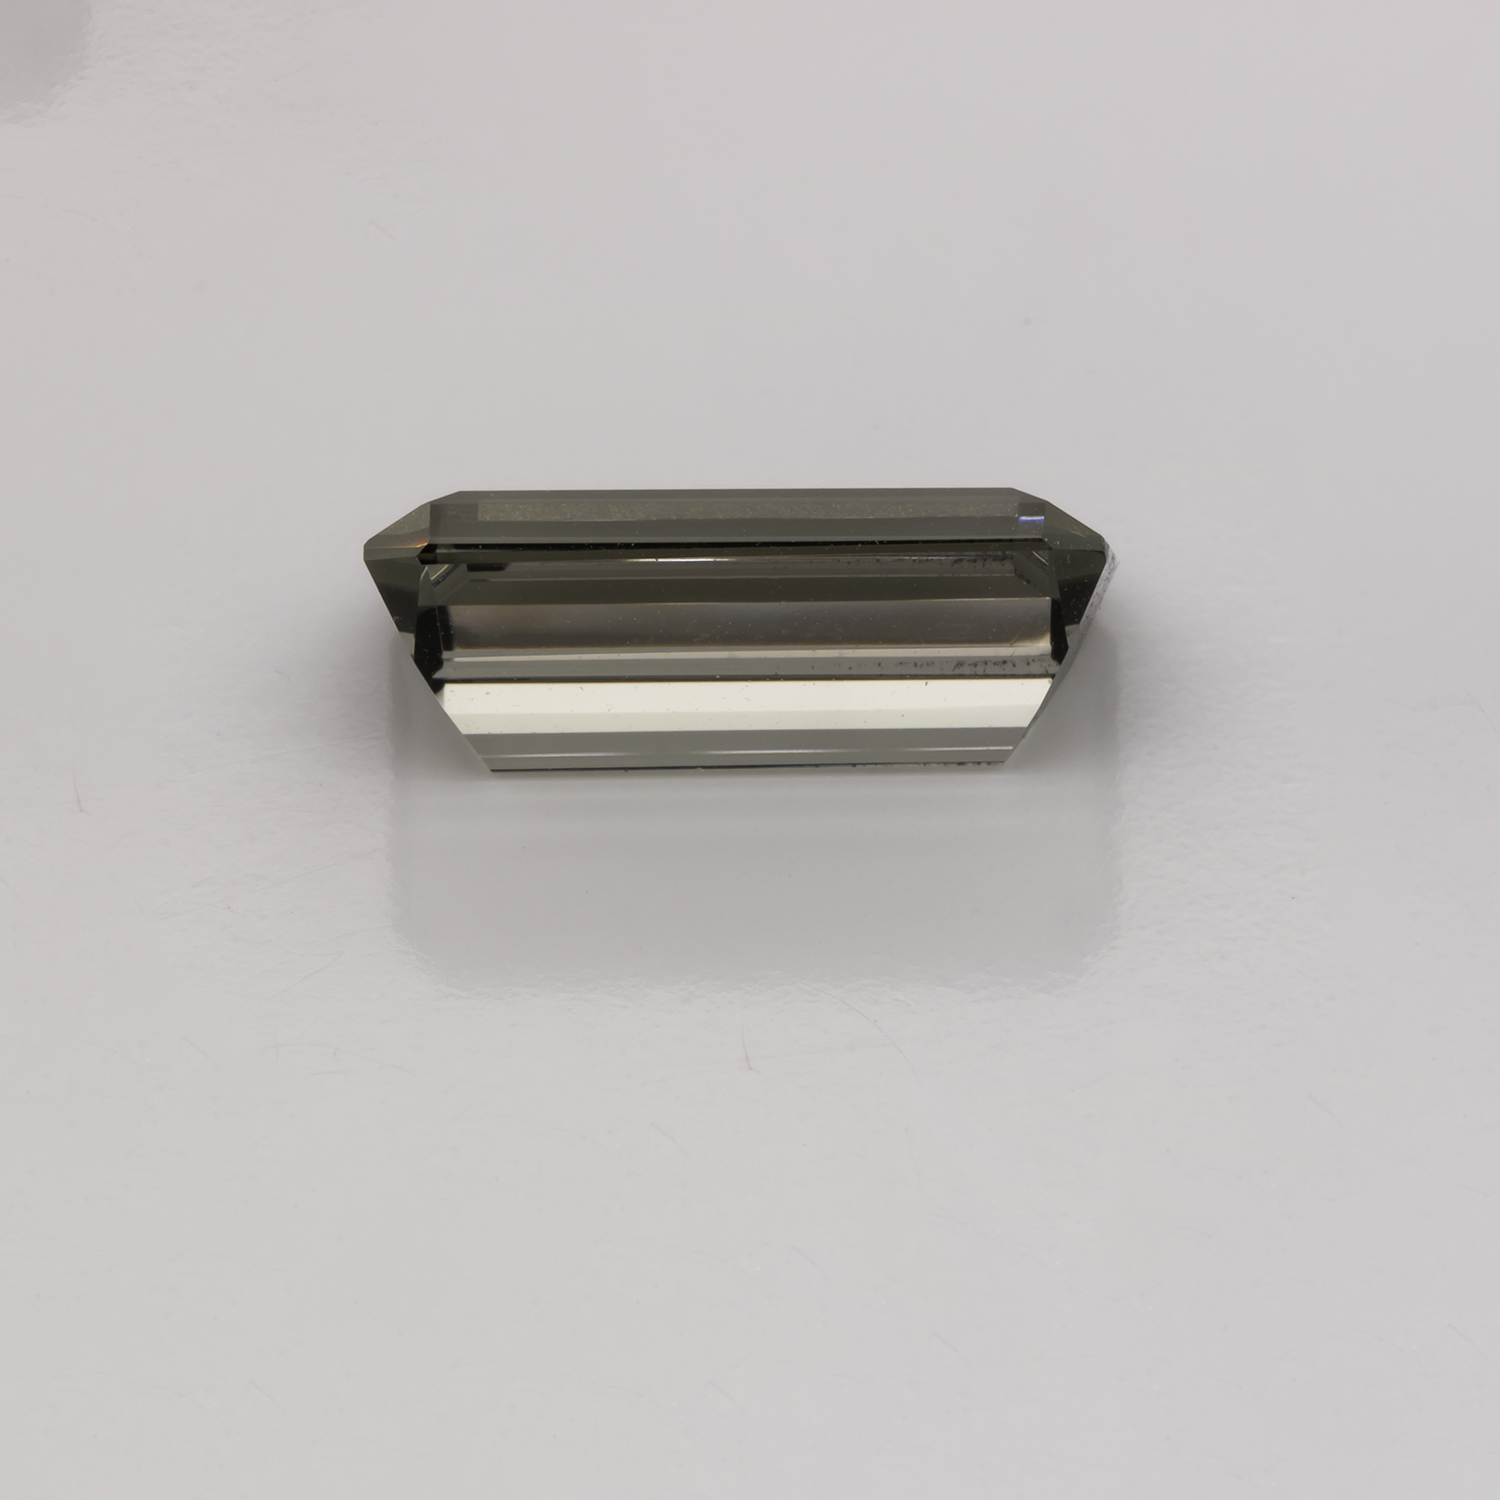 Tourmaline - grey/brown, octagon, 12.9x7.1 mm, 3.72 cts, No. TR991037